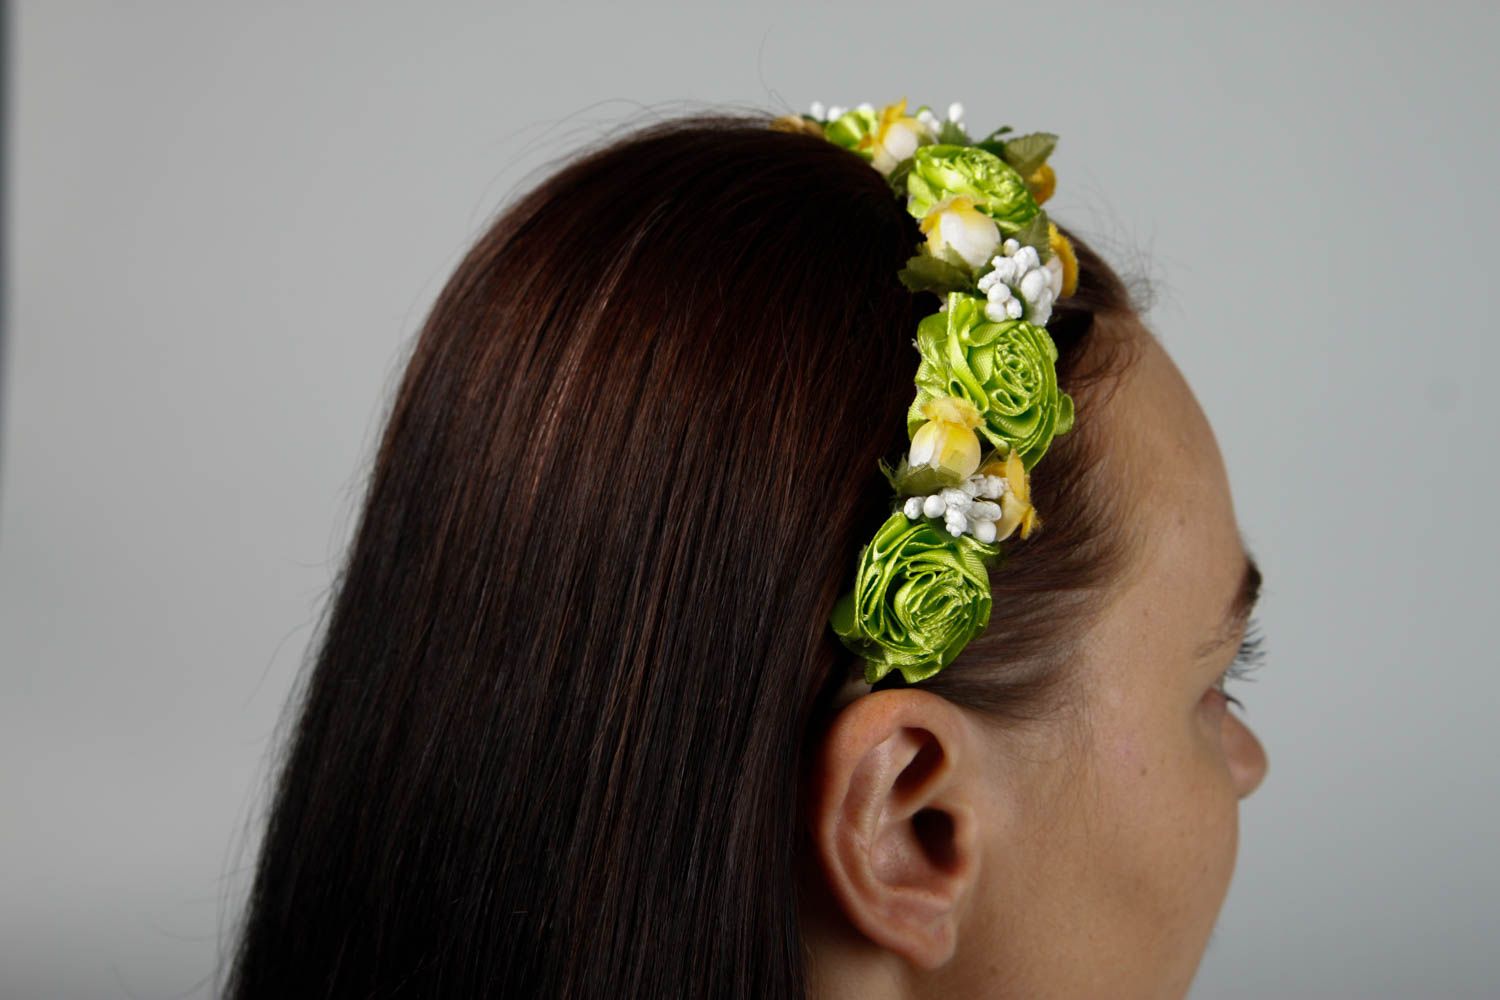 Stylish handmade leather headband flowers in hair designer accessories for girls photo 2